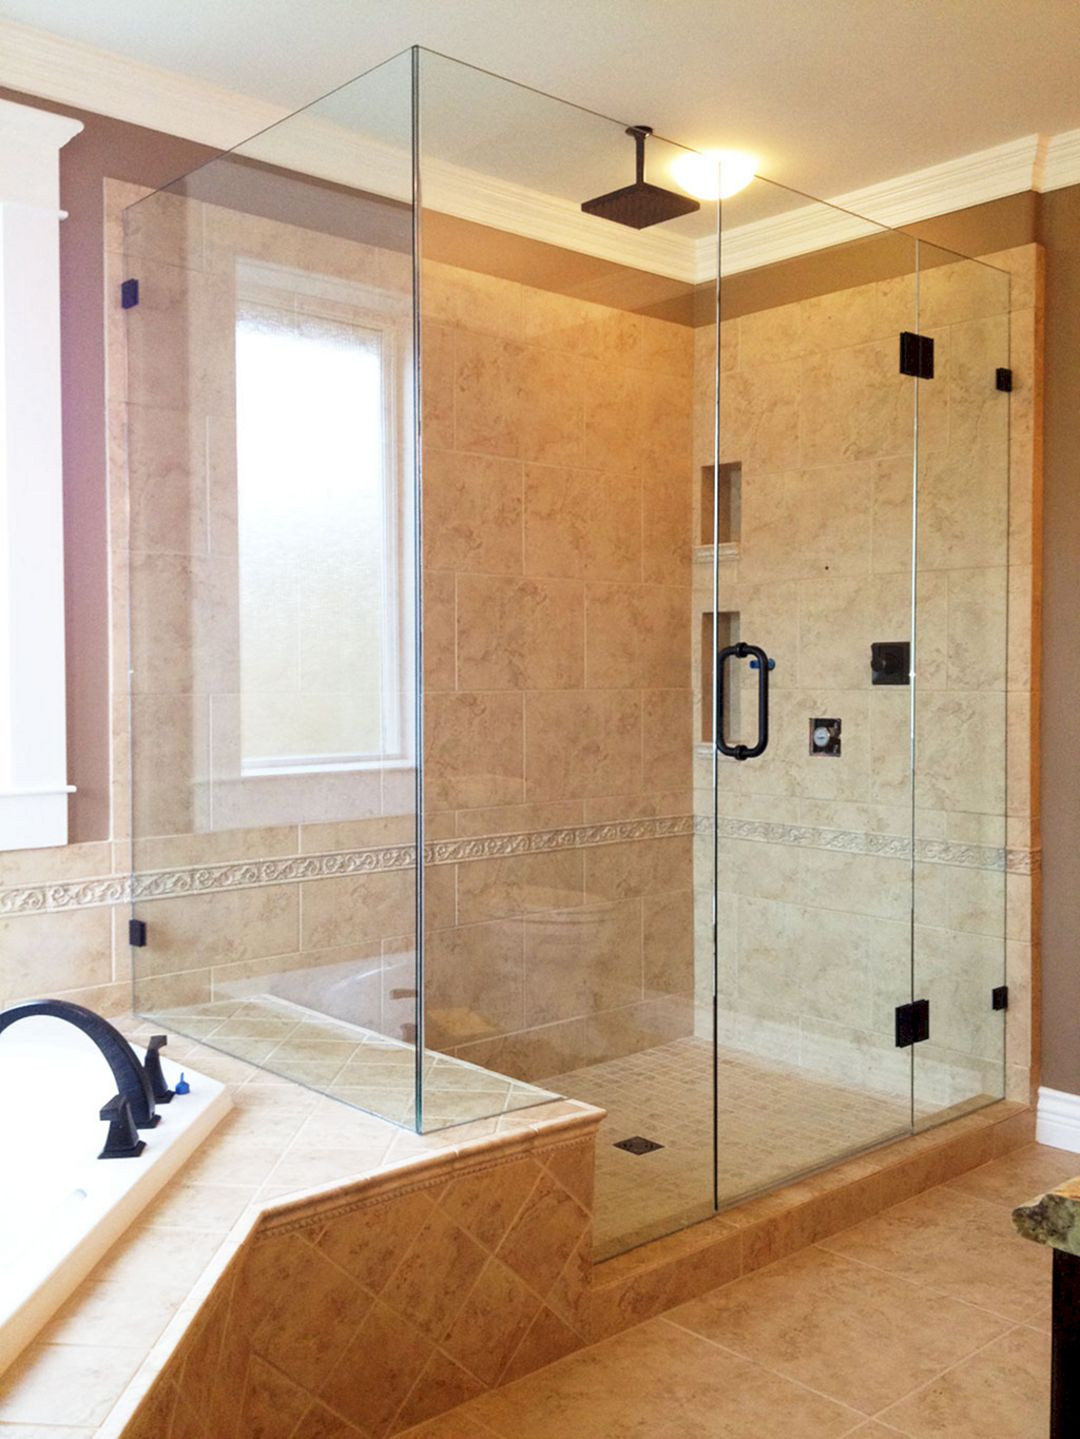 Picture Of Bathroom Showers
 Unique Bathroom Shower Ideas 16 – DECORATHING